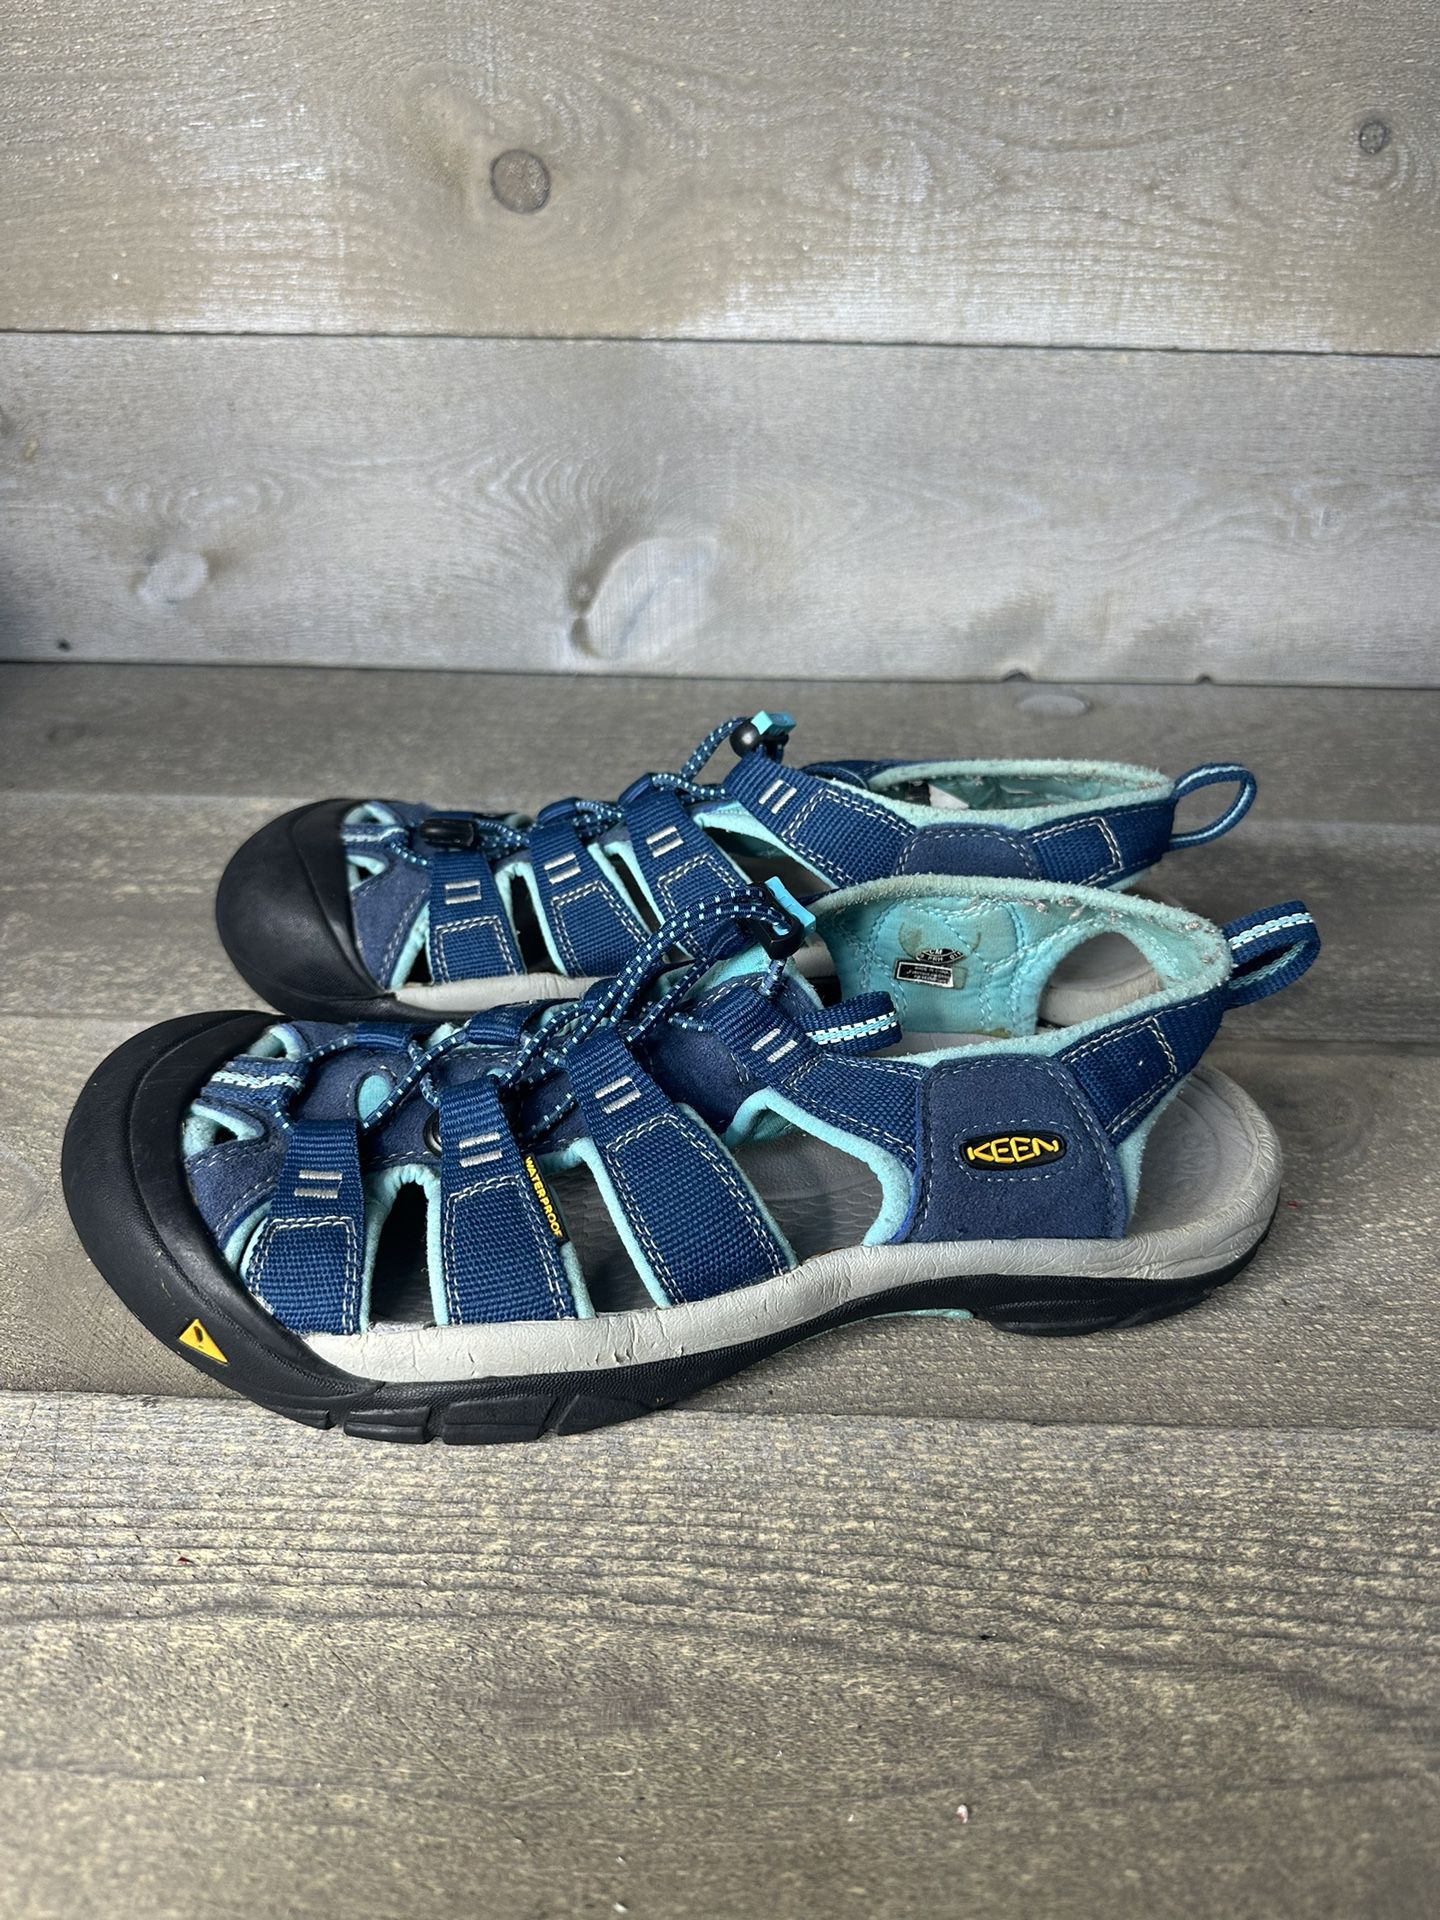 Keen Newport H2 Hiking Sports Sandals Womens US 9.5 Fabric Blue Aqua Waterproof